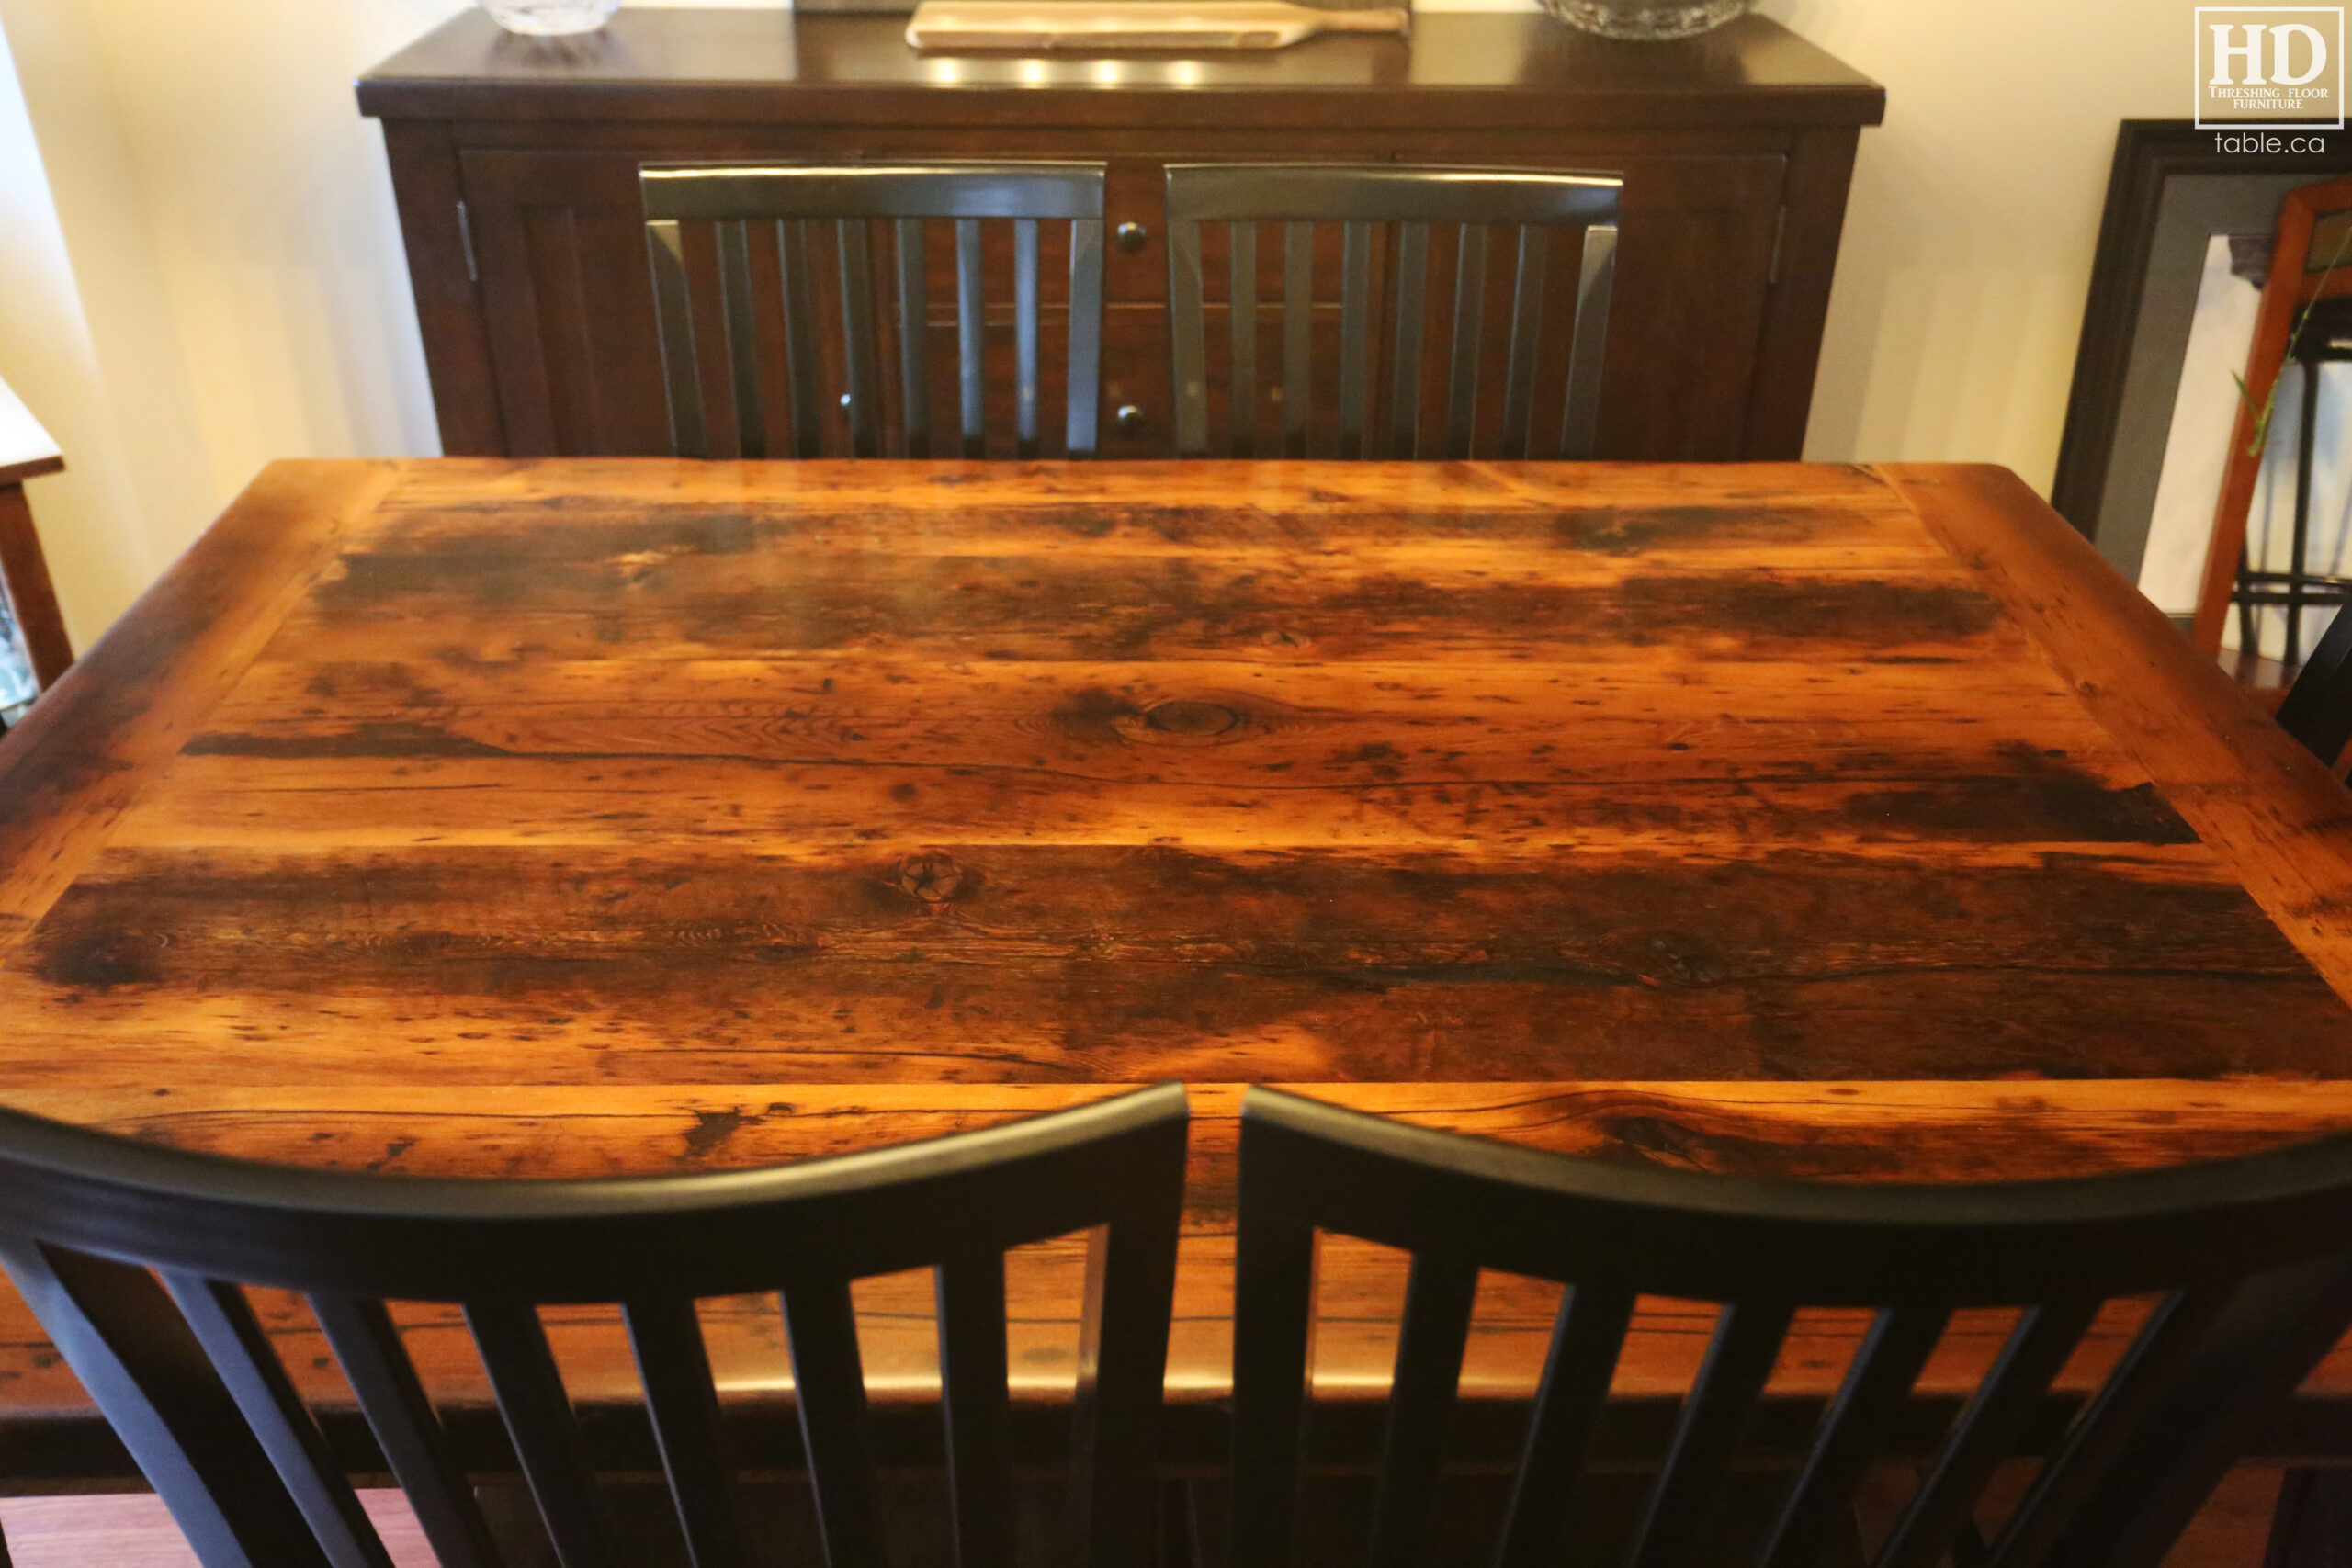 Reclaimed Wood Harvest Table by HD Threshing Floor Furniture / www.table.ca